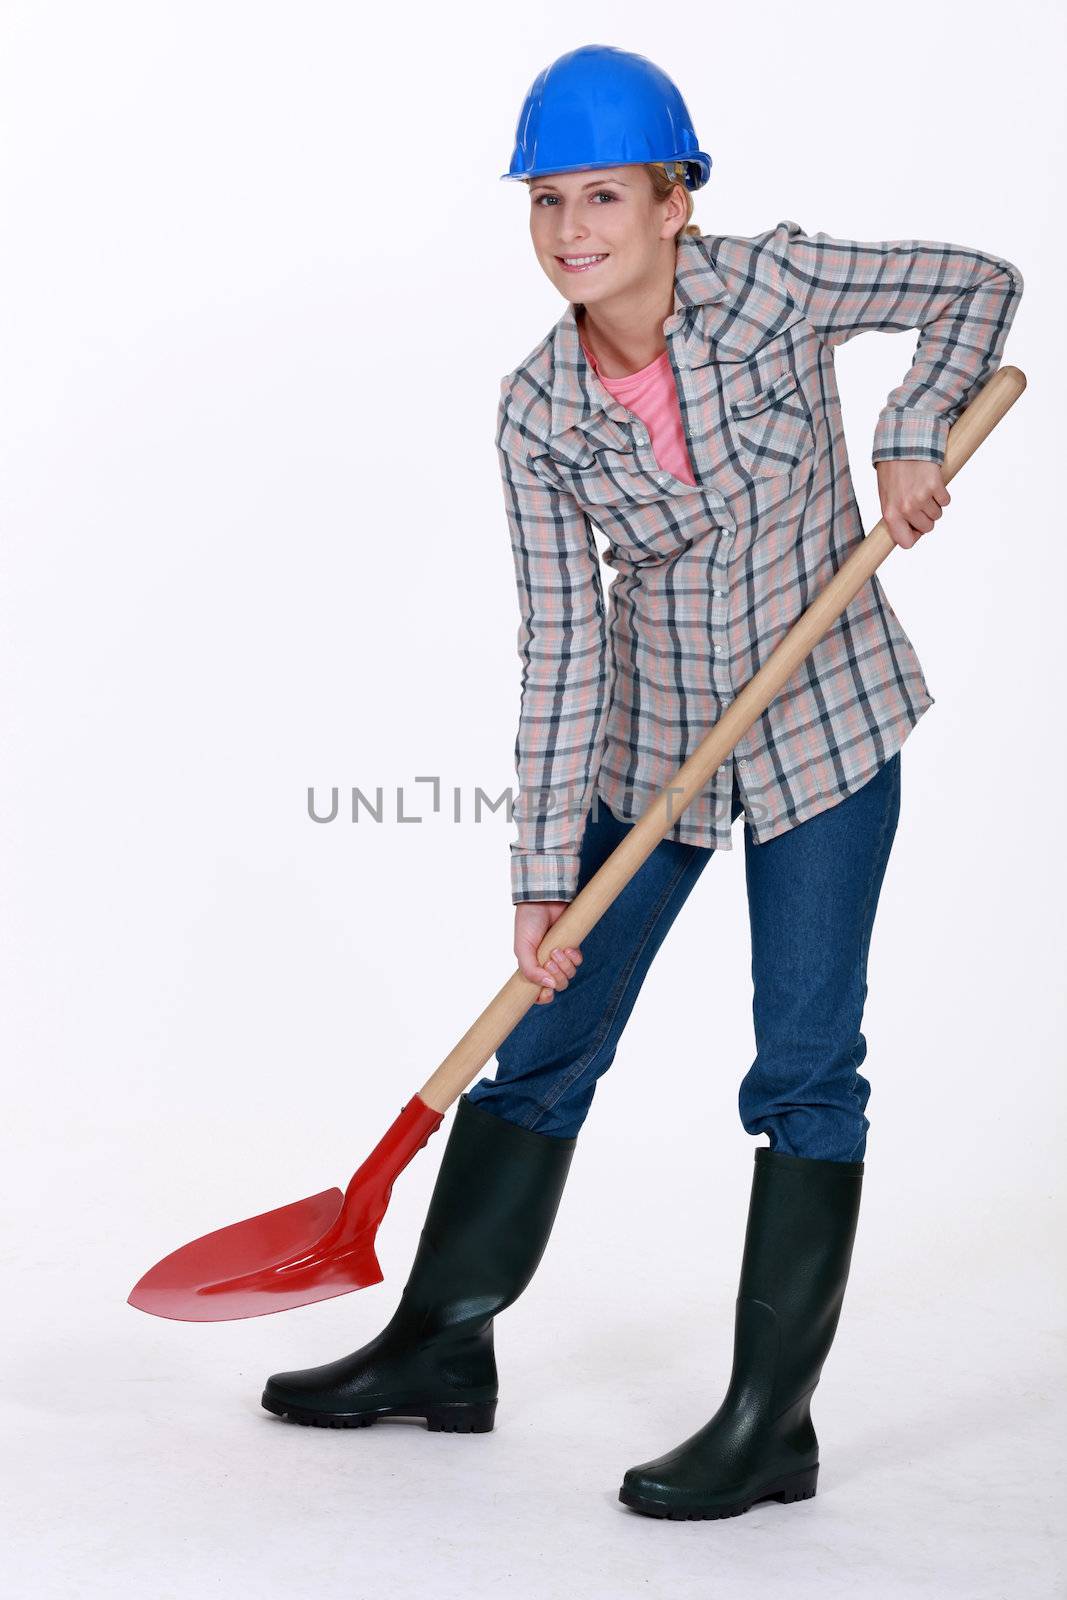 Woman using spade